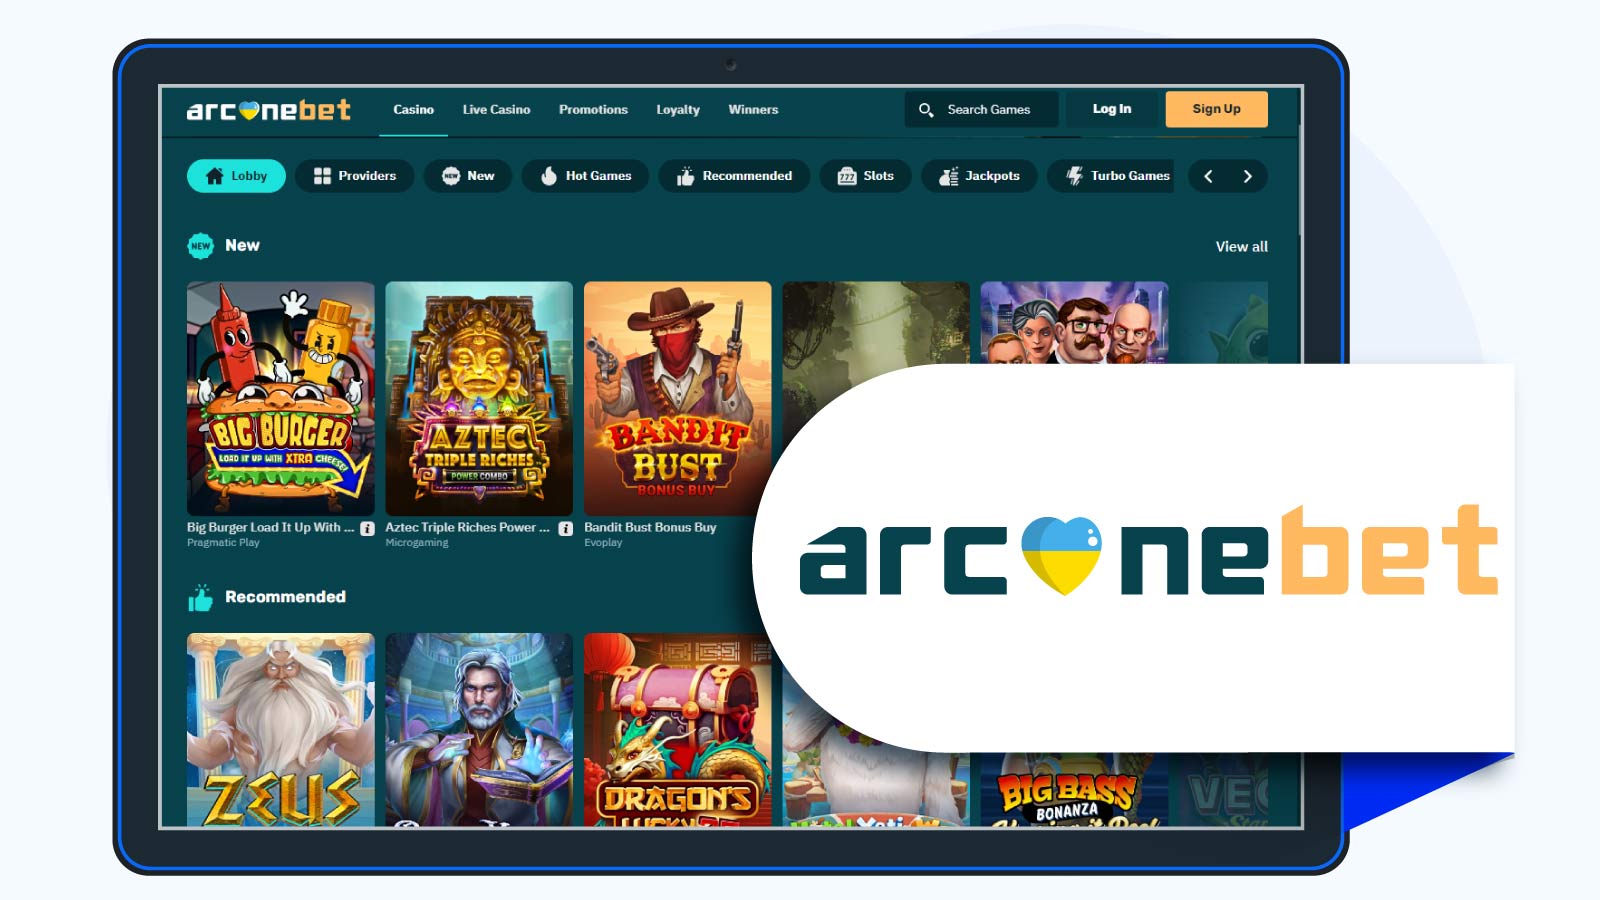 ArcaneBet Casino – Best Low Wagering Online Casino For Slots